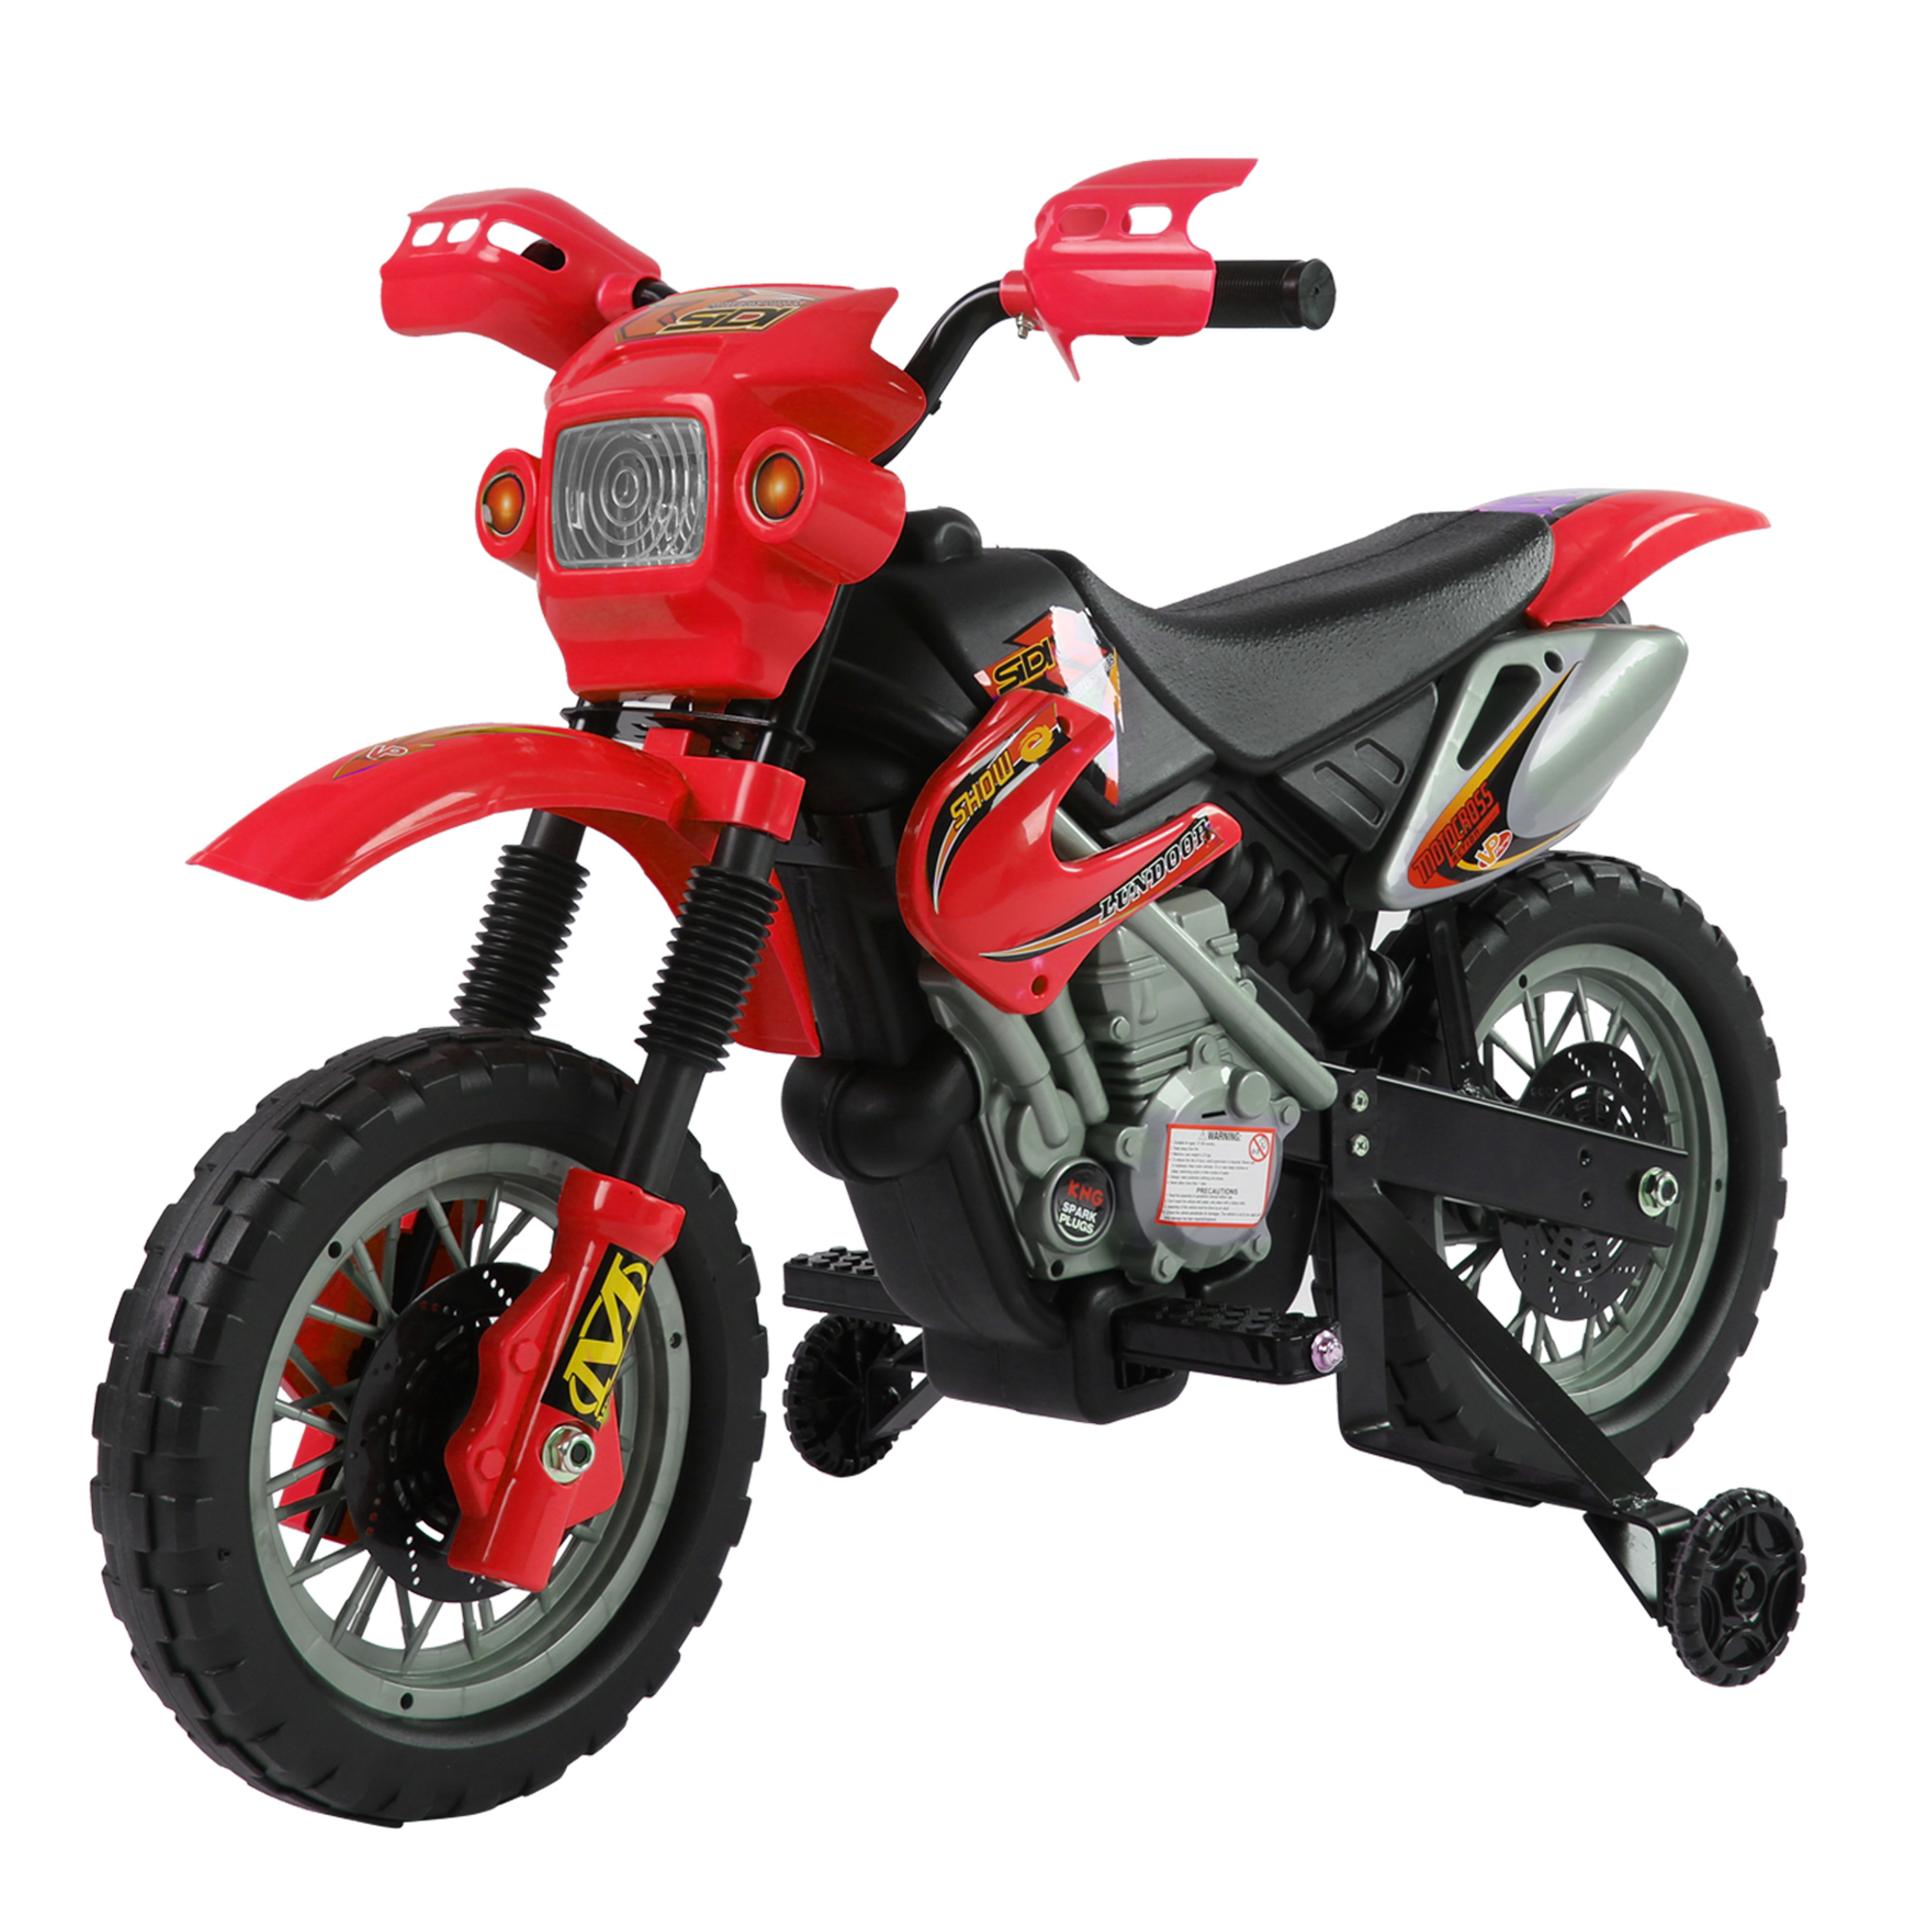 Moto infantil - Motos - Santa Maria, Santo André 1240647629